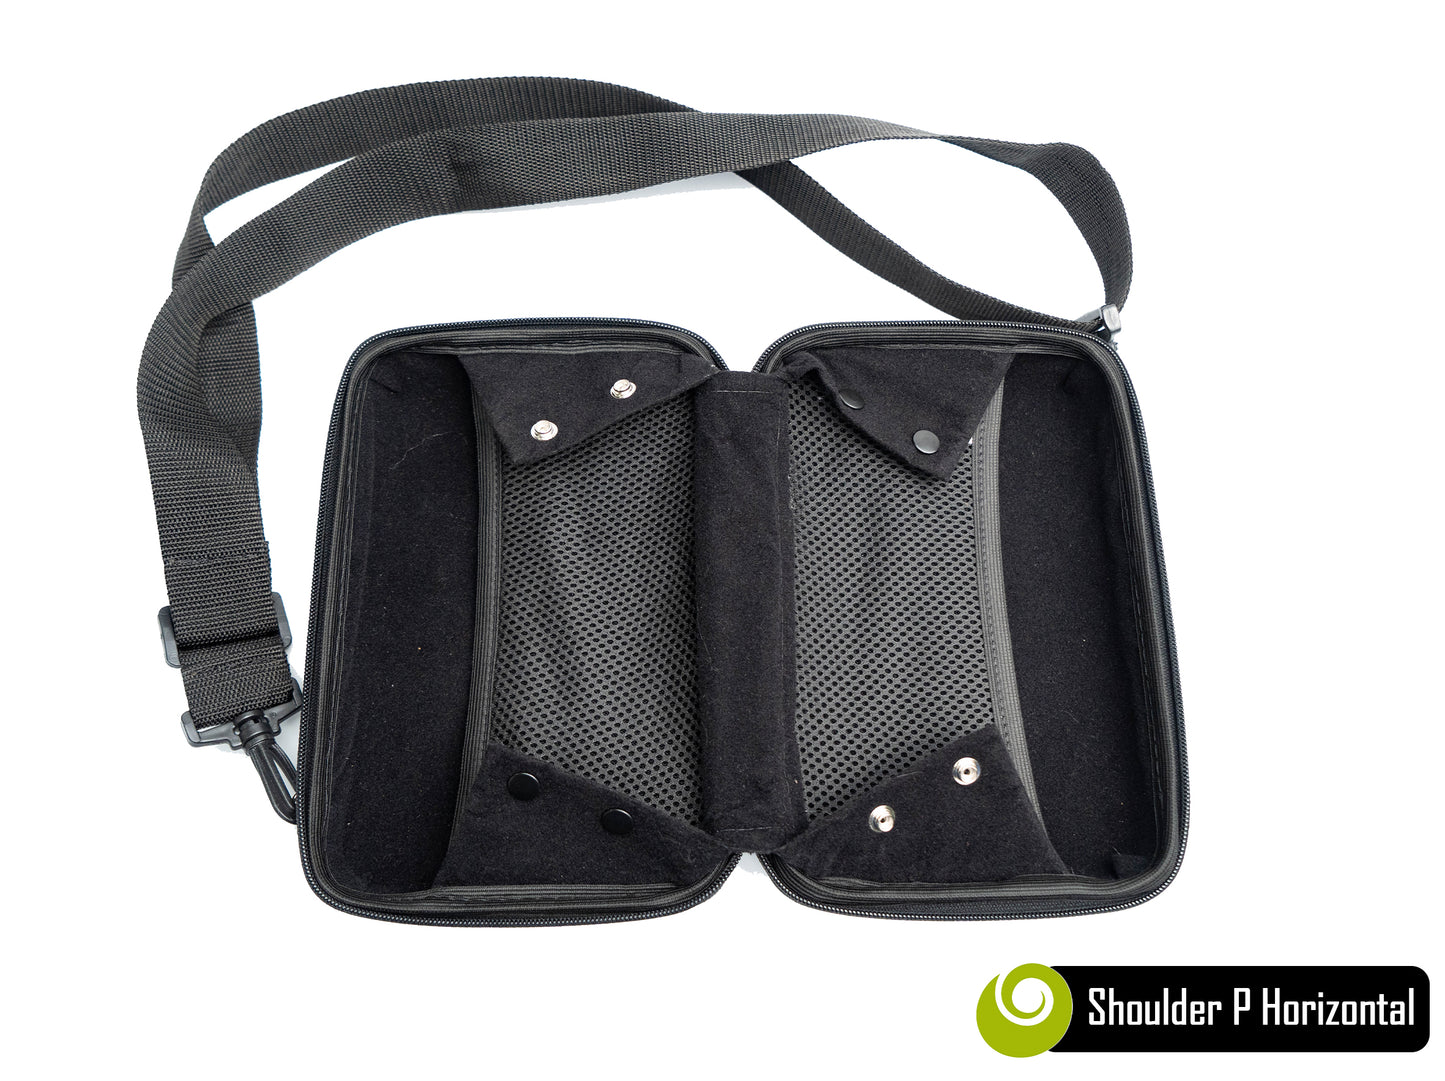 Bolsa Shoulder Bag P Horizontal - Mulher Maravilha - Pochete Slim Kameleon